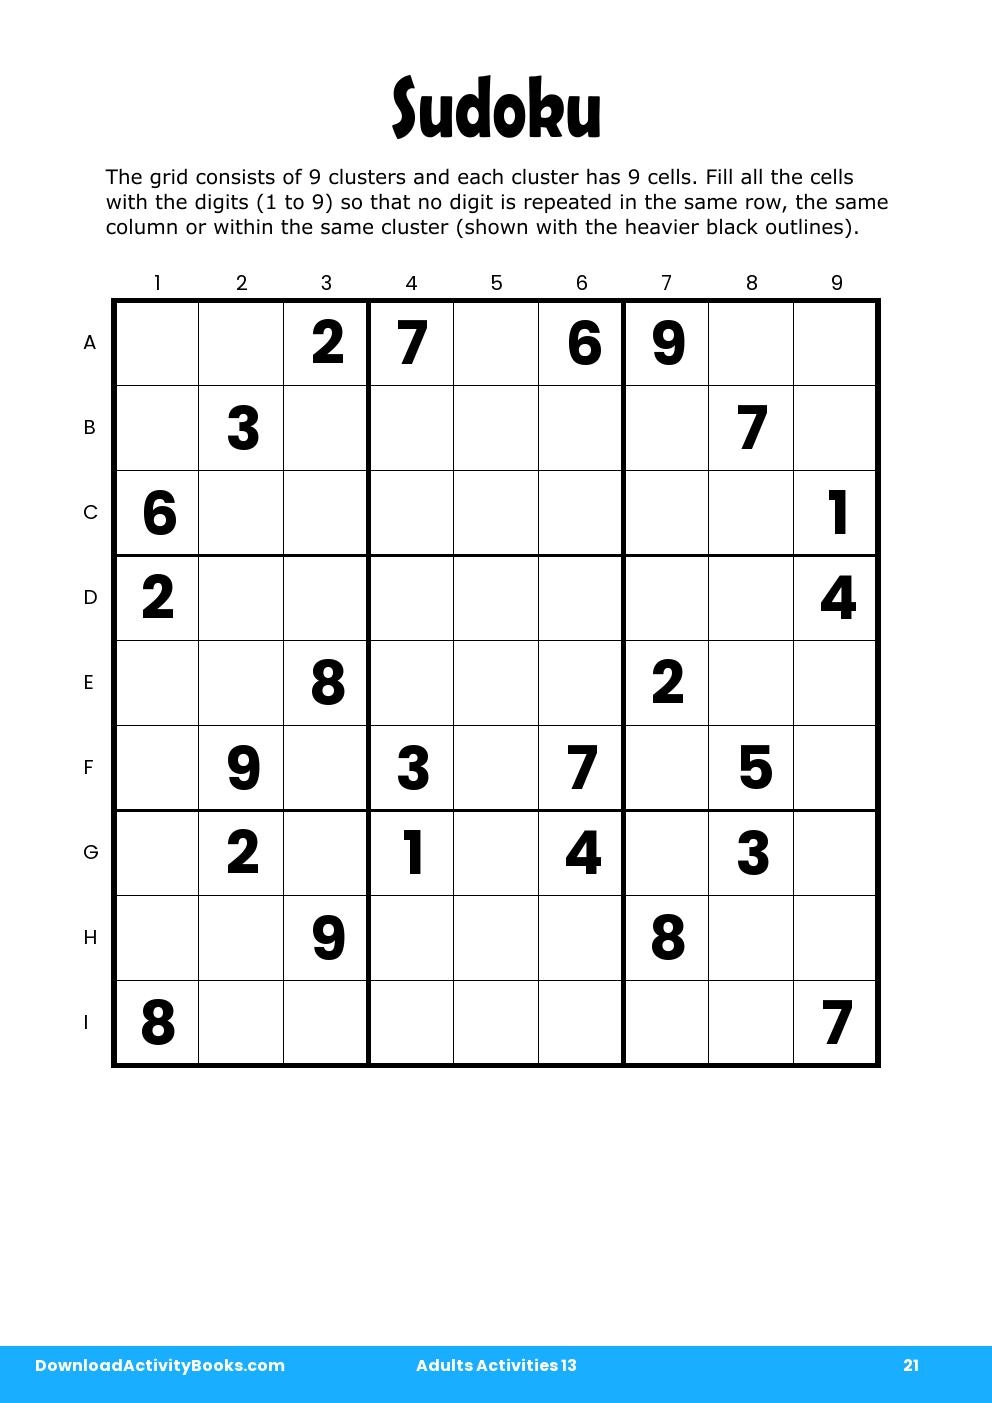 Sudoku in Adults Activities 13